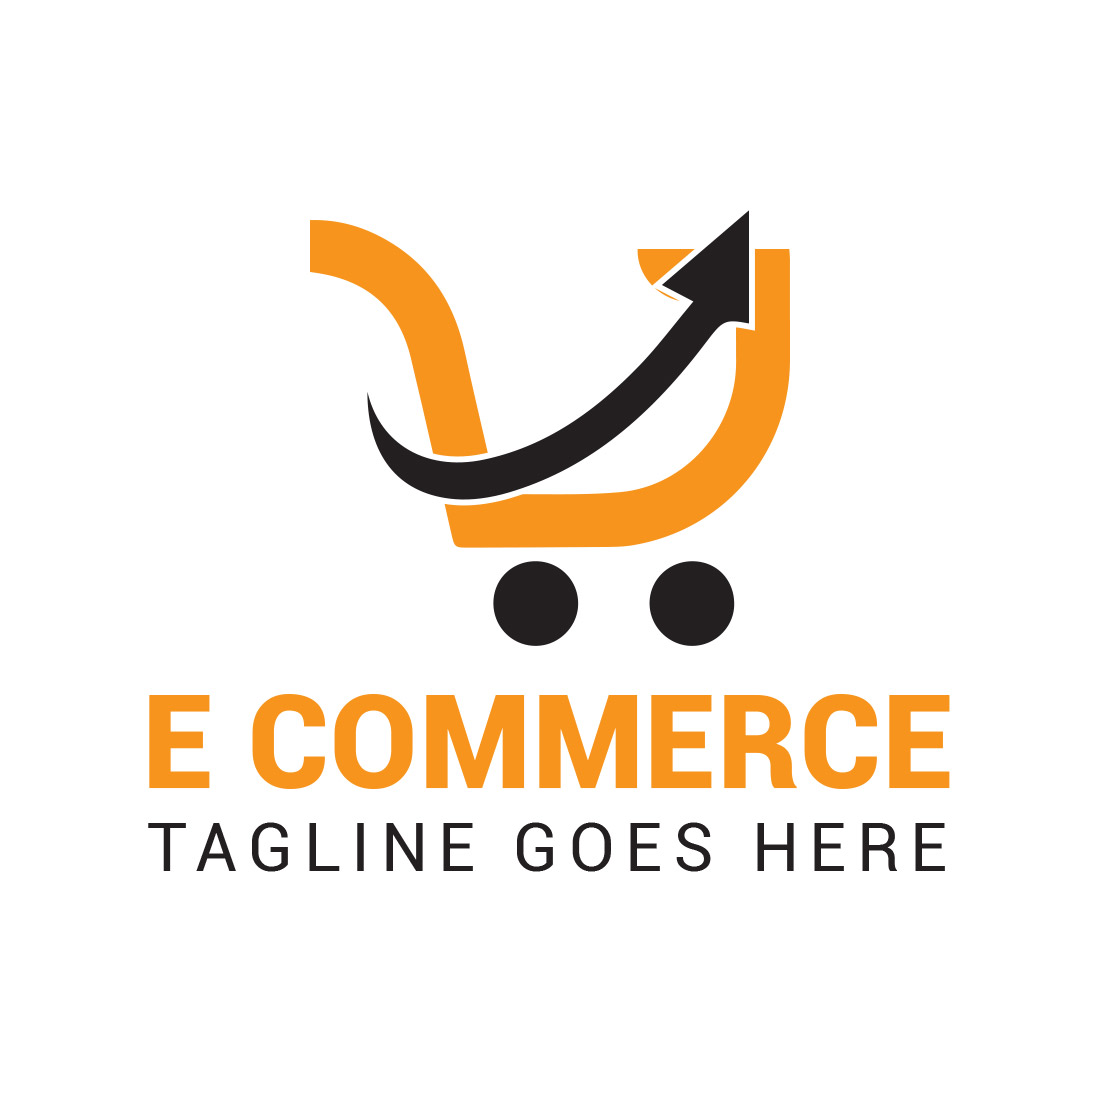 E- Commerce, Marketing & Shopping Logo preview image.